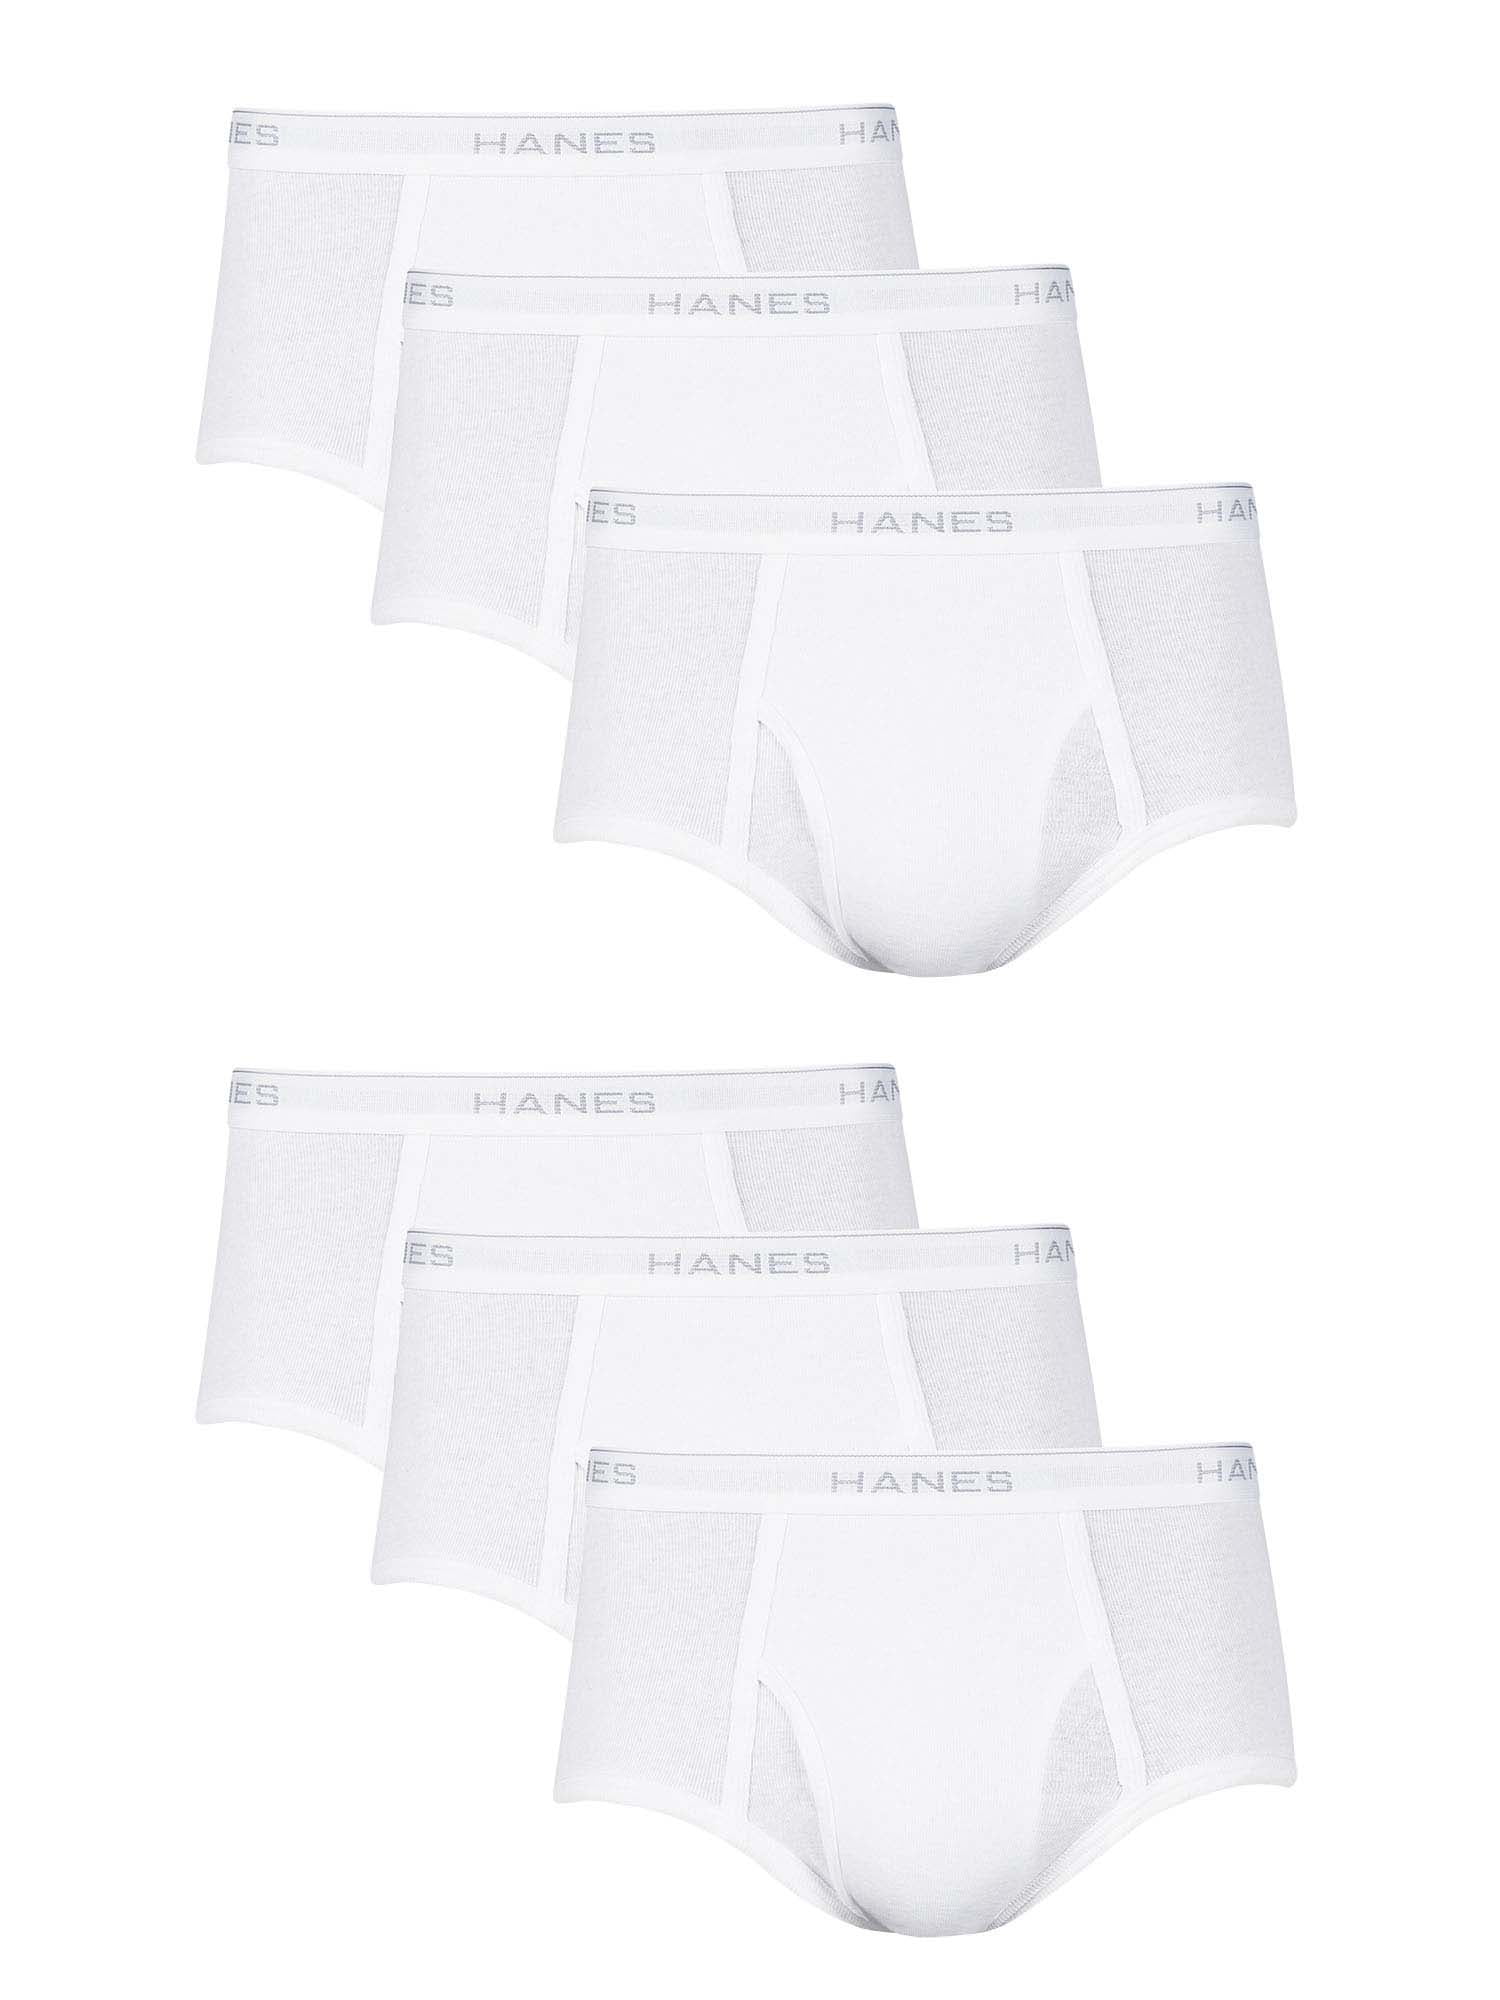 Hanes Men's Premium ComfortSoft Sport Briefs 6 Pack White 